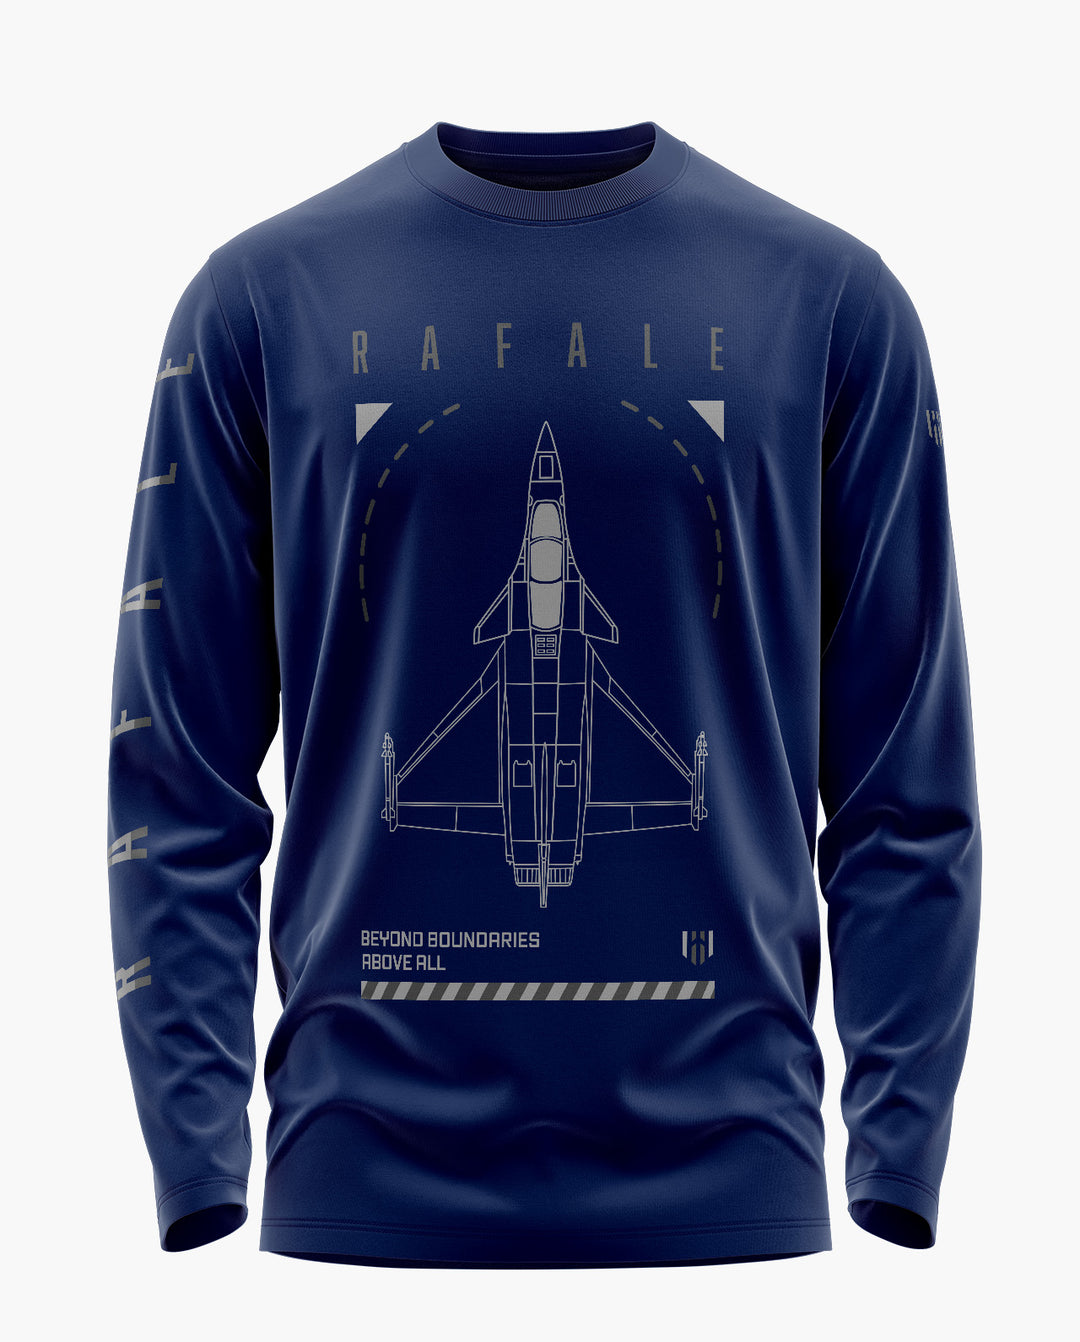 RAFALE SUPREMACY Full Sleeve T-Shirt